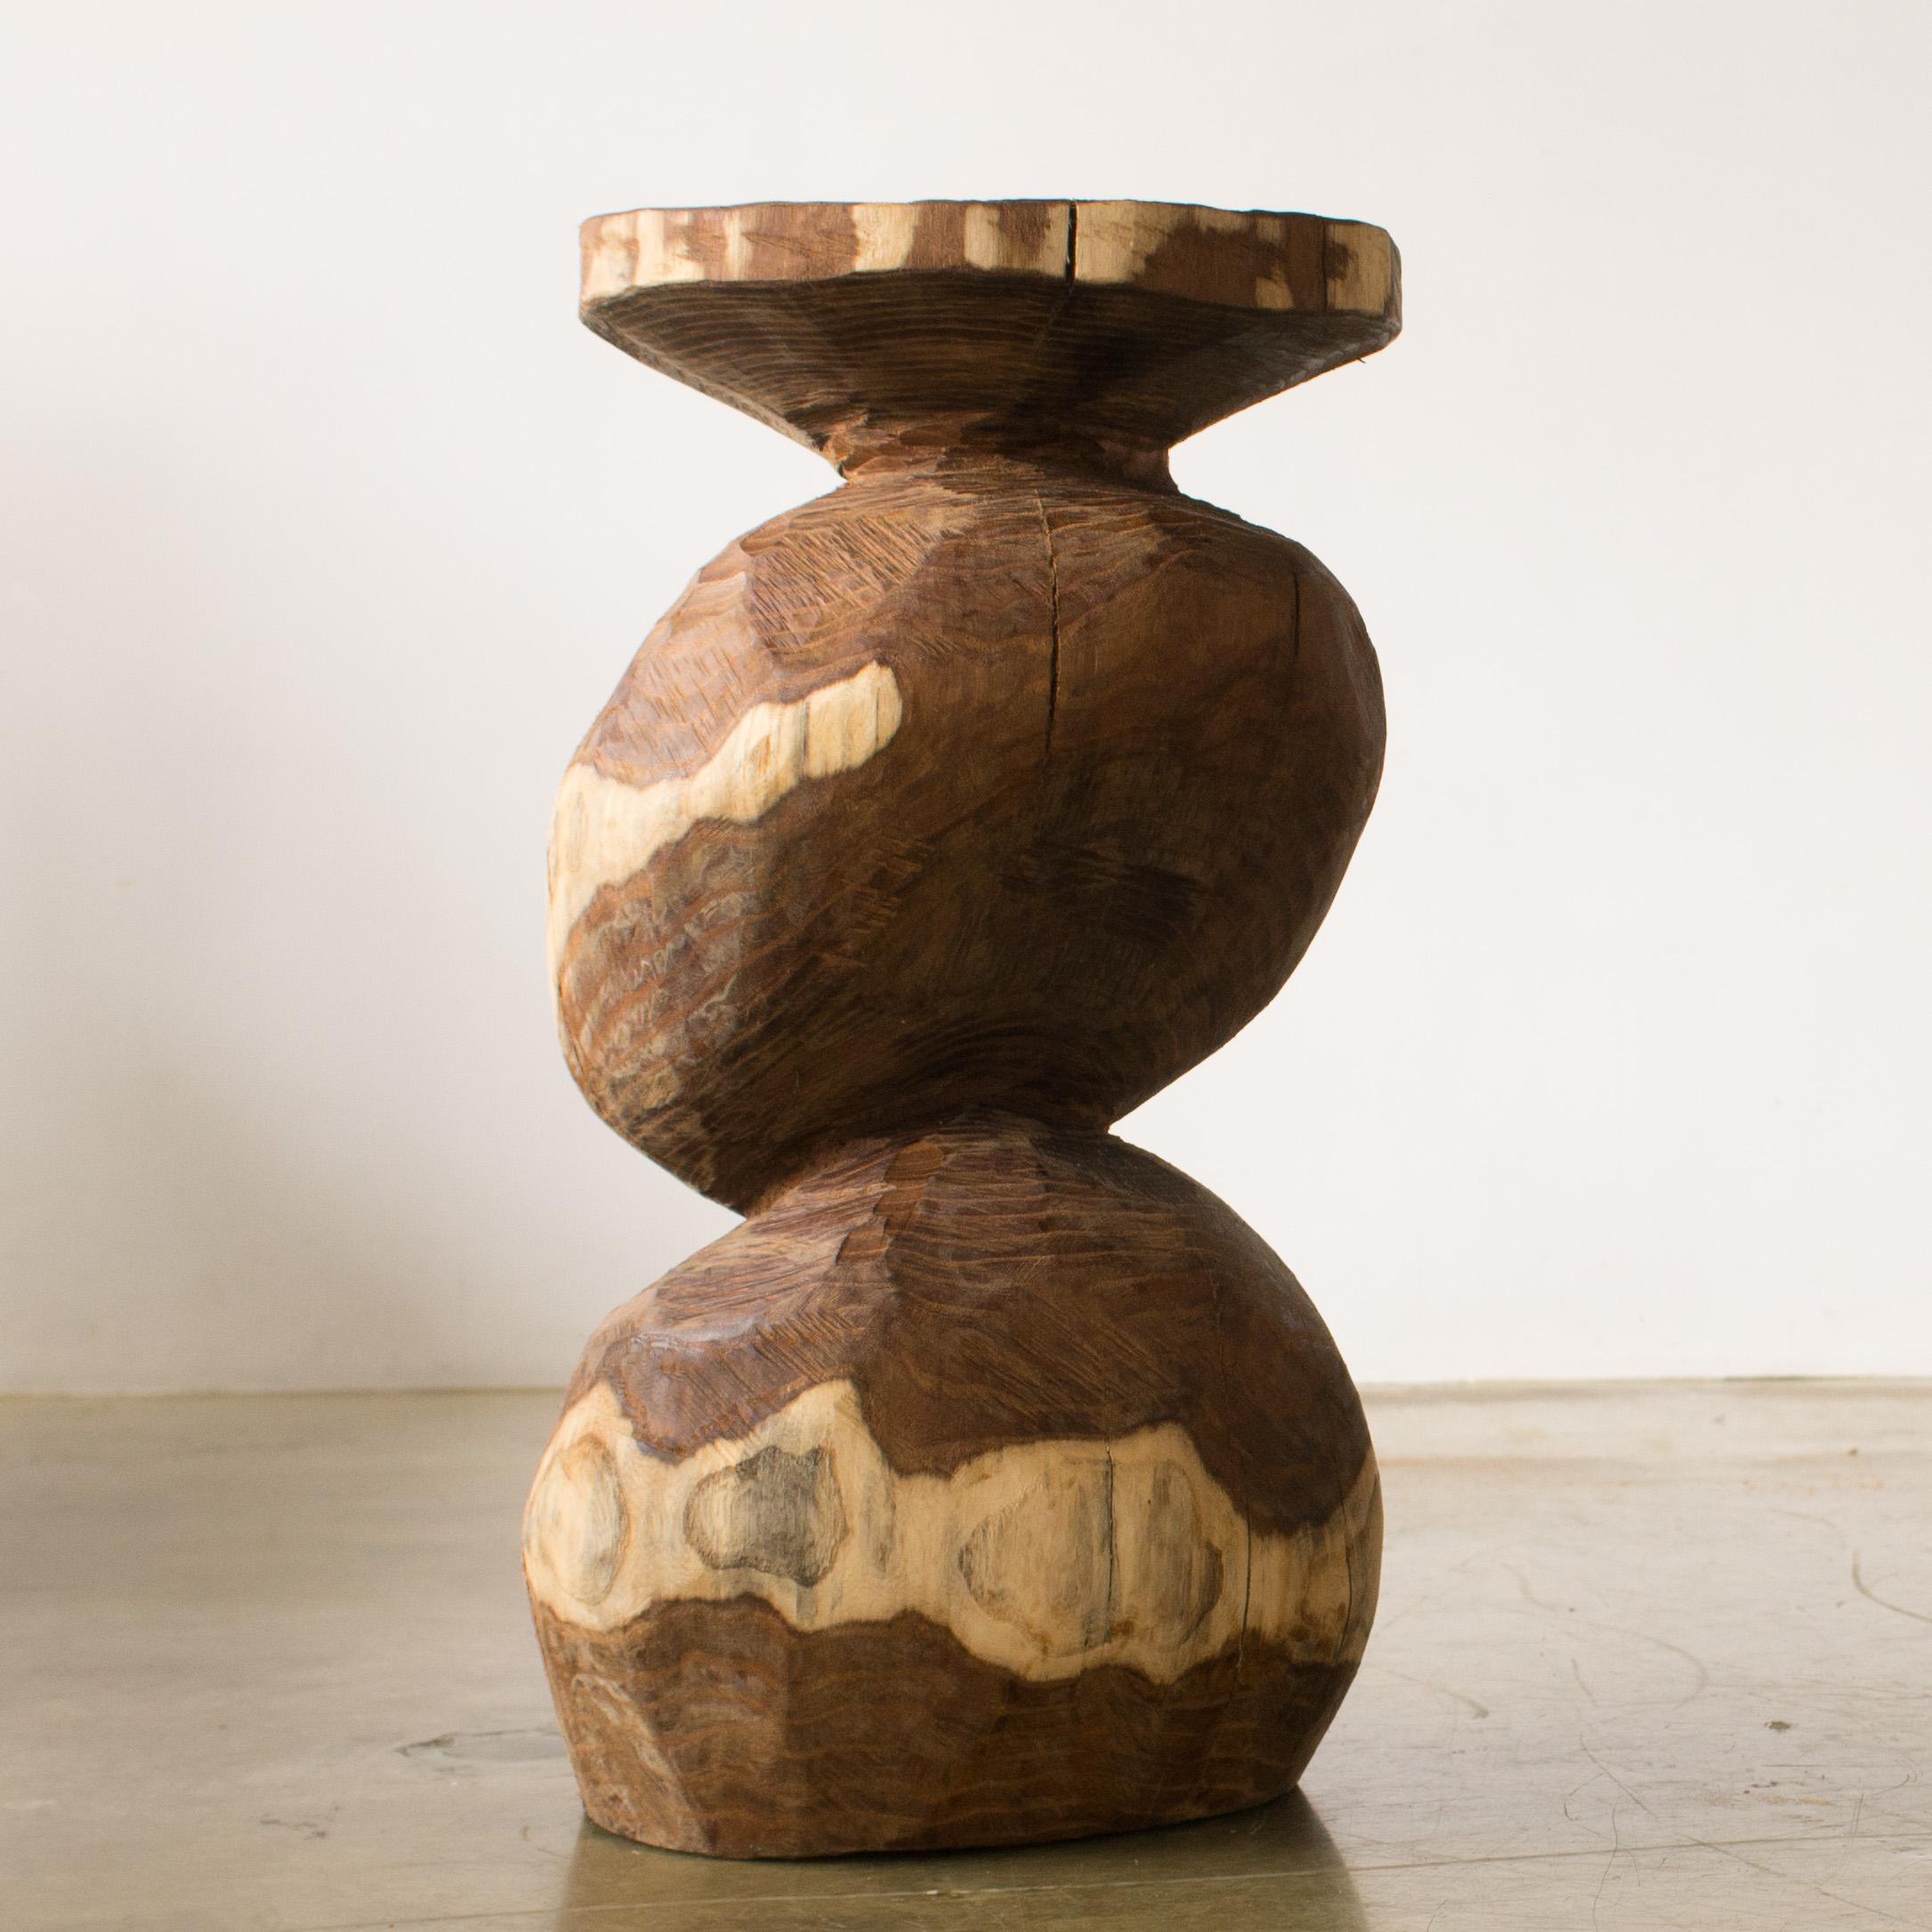 Hand-Carved Hiroyuki Nishimura Furniture Sculptural Wood Stool10-07 Tribal Glamping